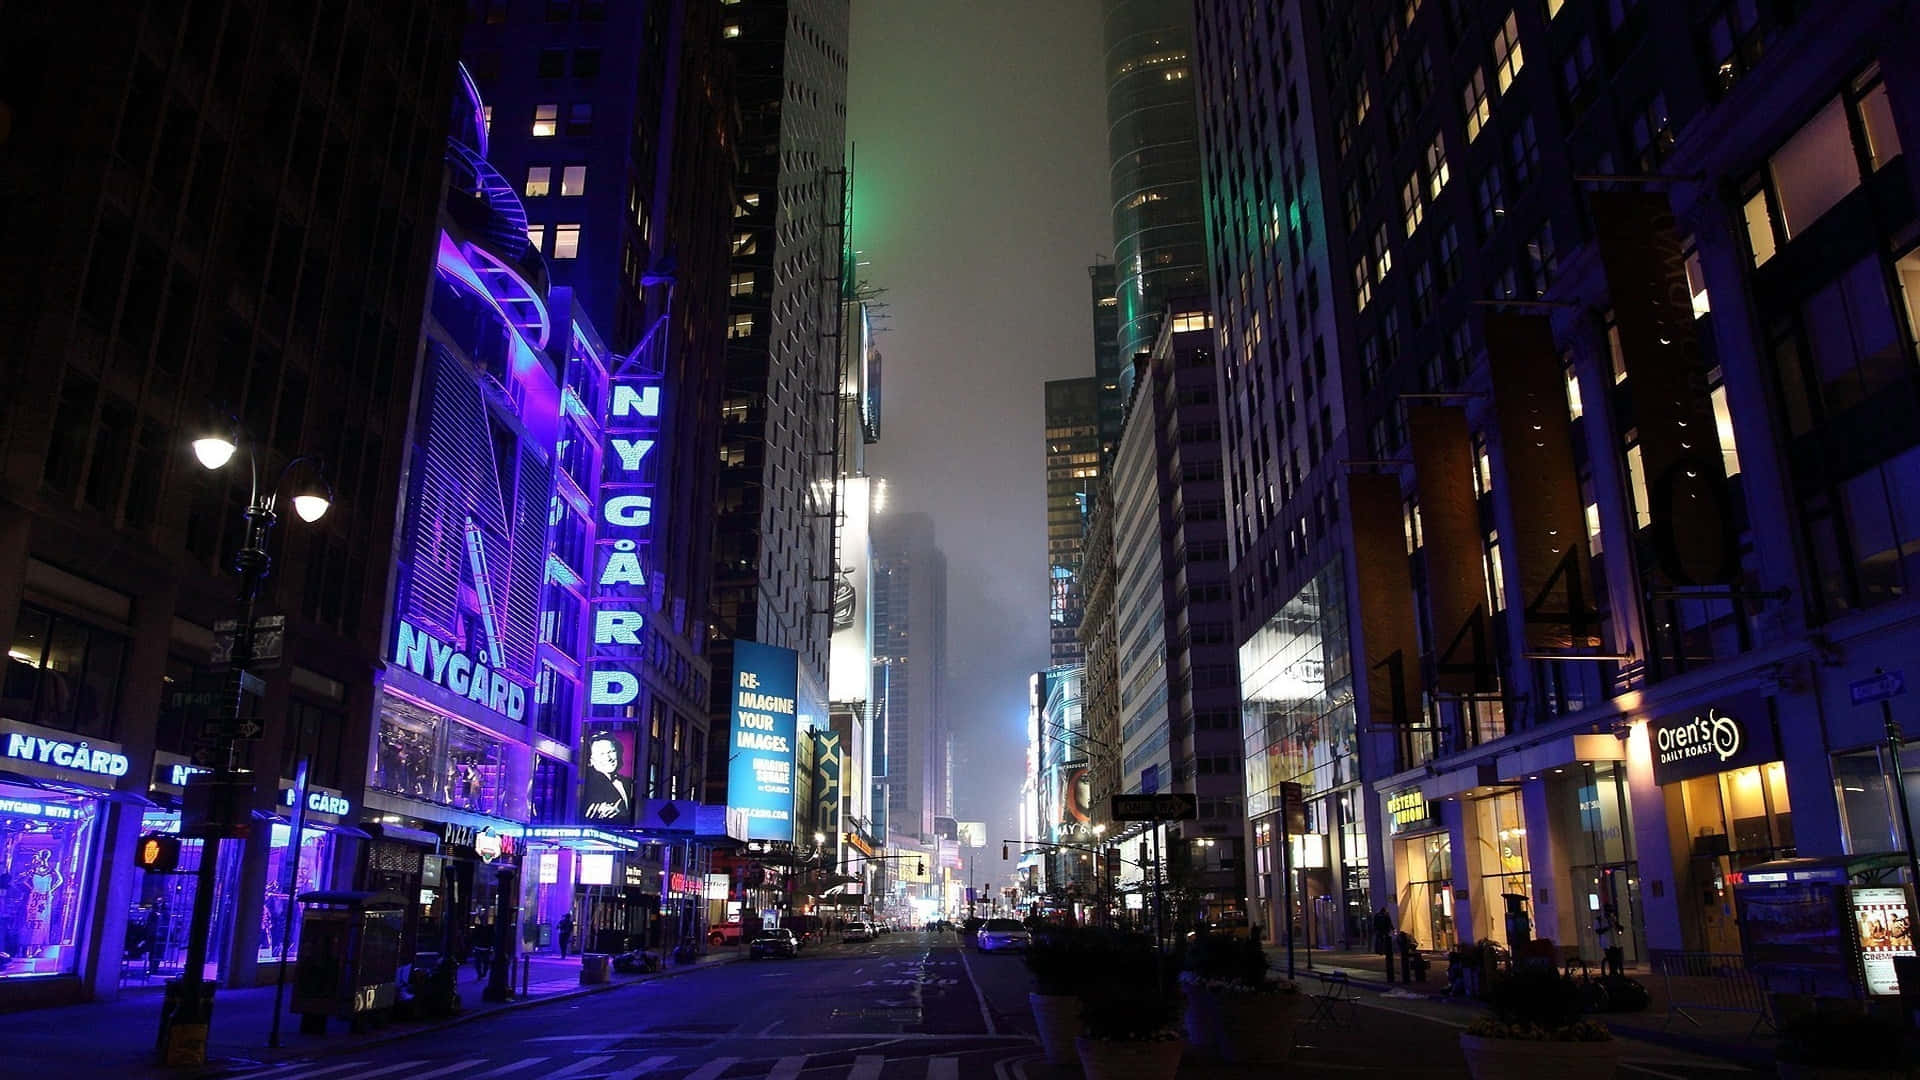 Stunning Cyberpunk vista as the lights of night city come alive